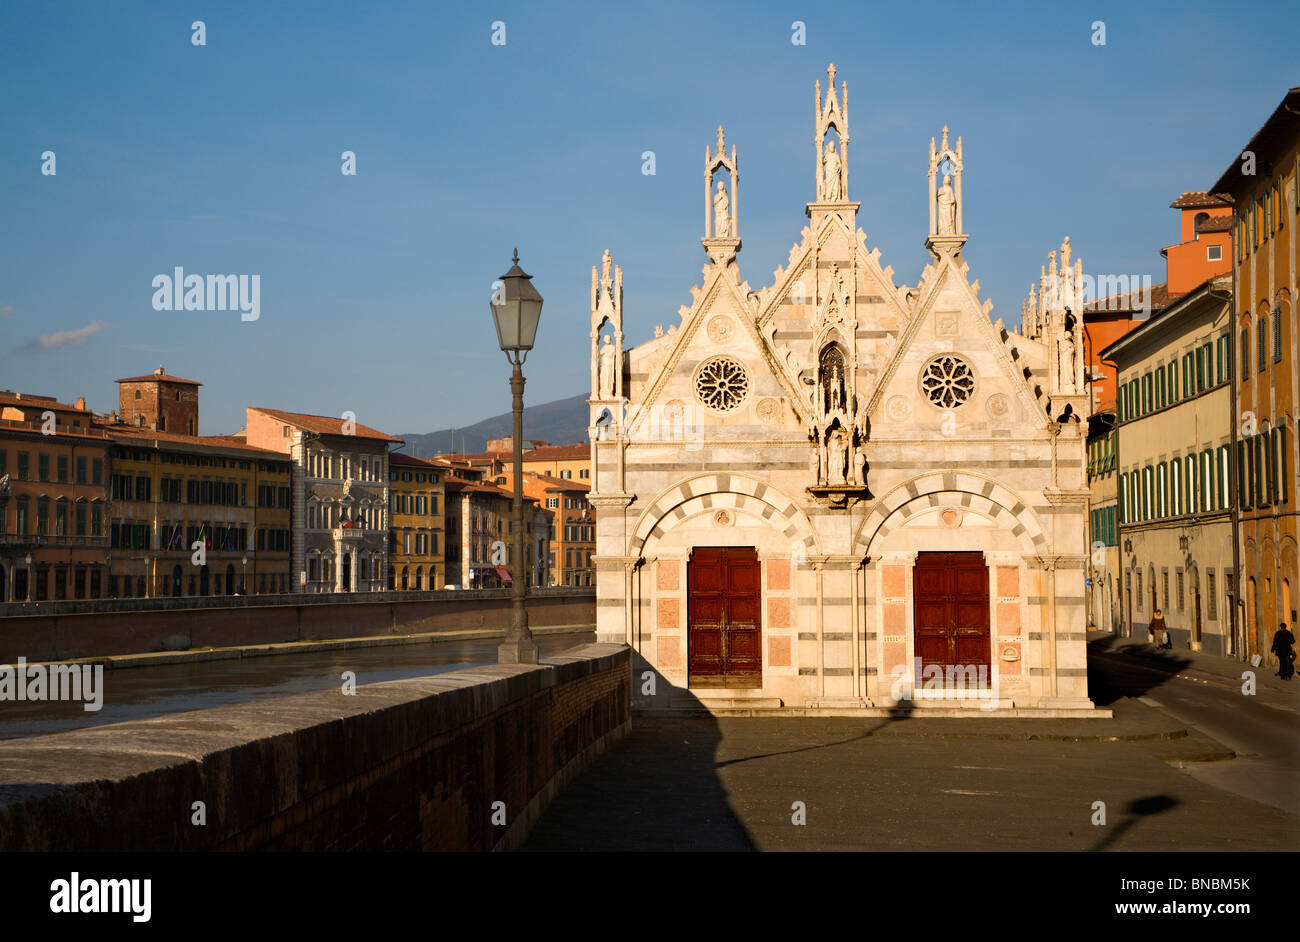 Pisa - bord de l'eau et petite chapelle de Santa Maria della Spina - soir Banque D'Images